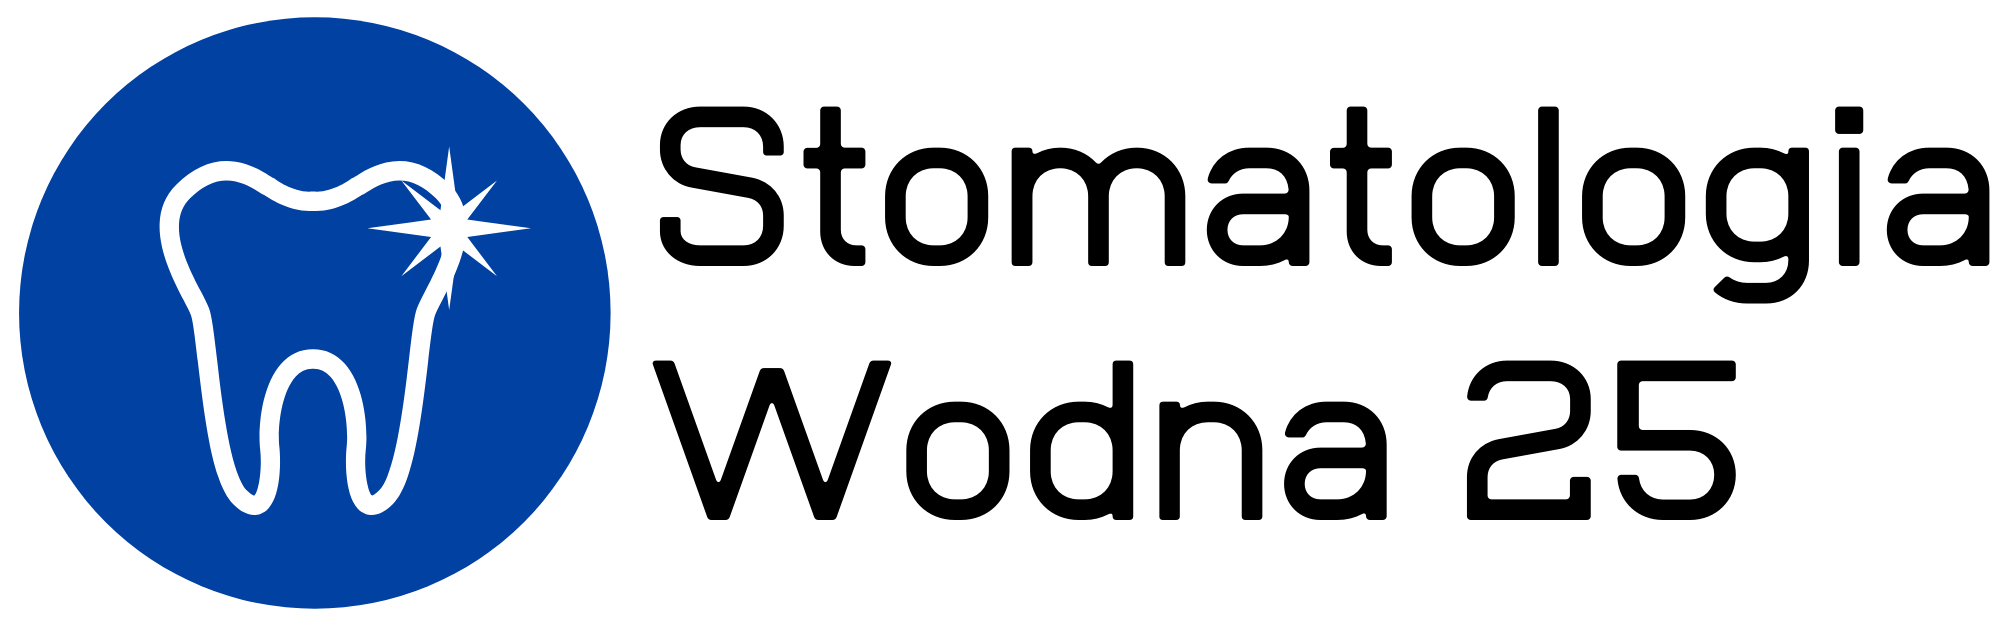 stomatologia wodna 25 logo